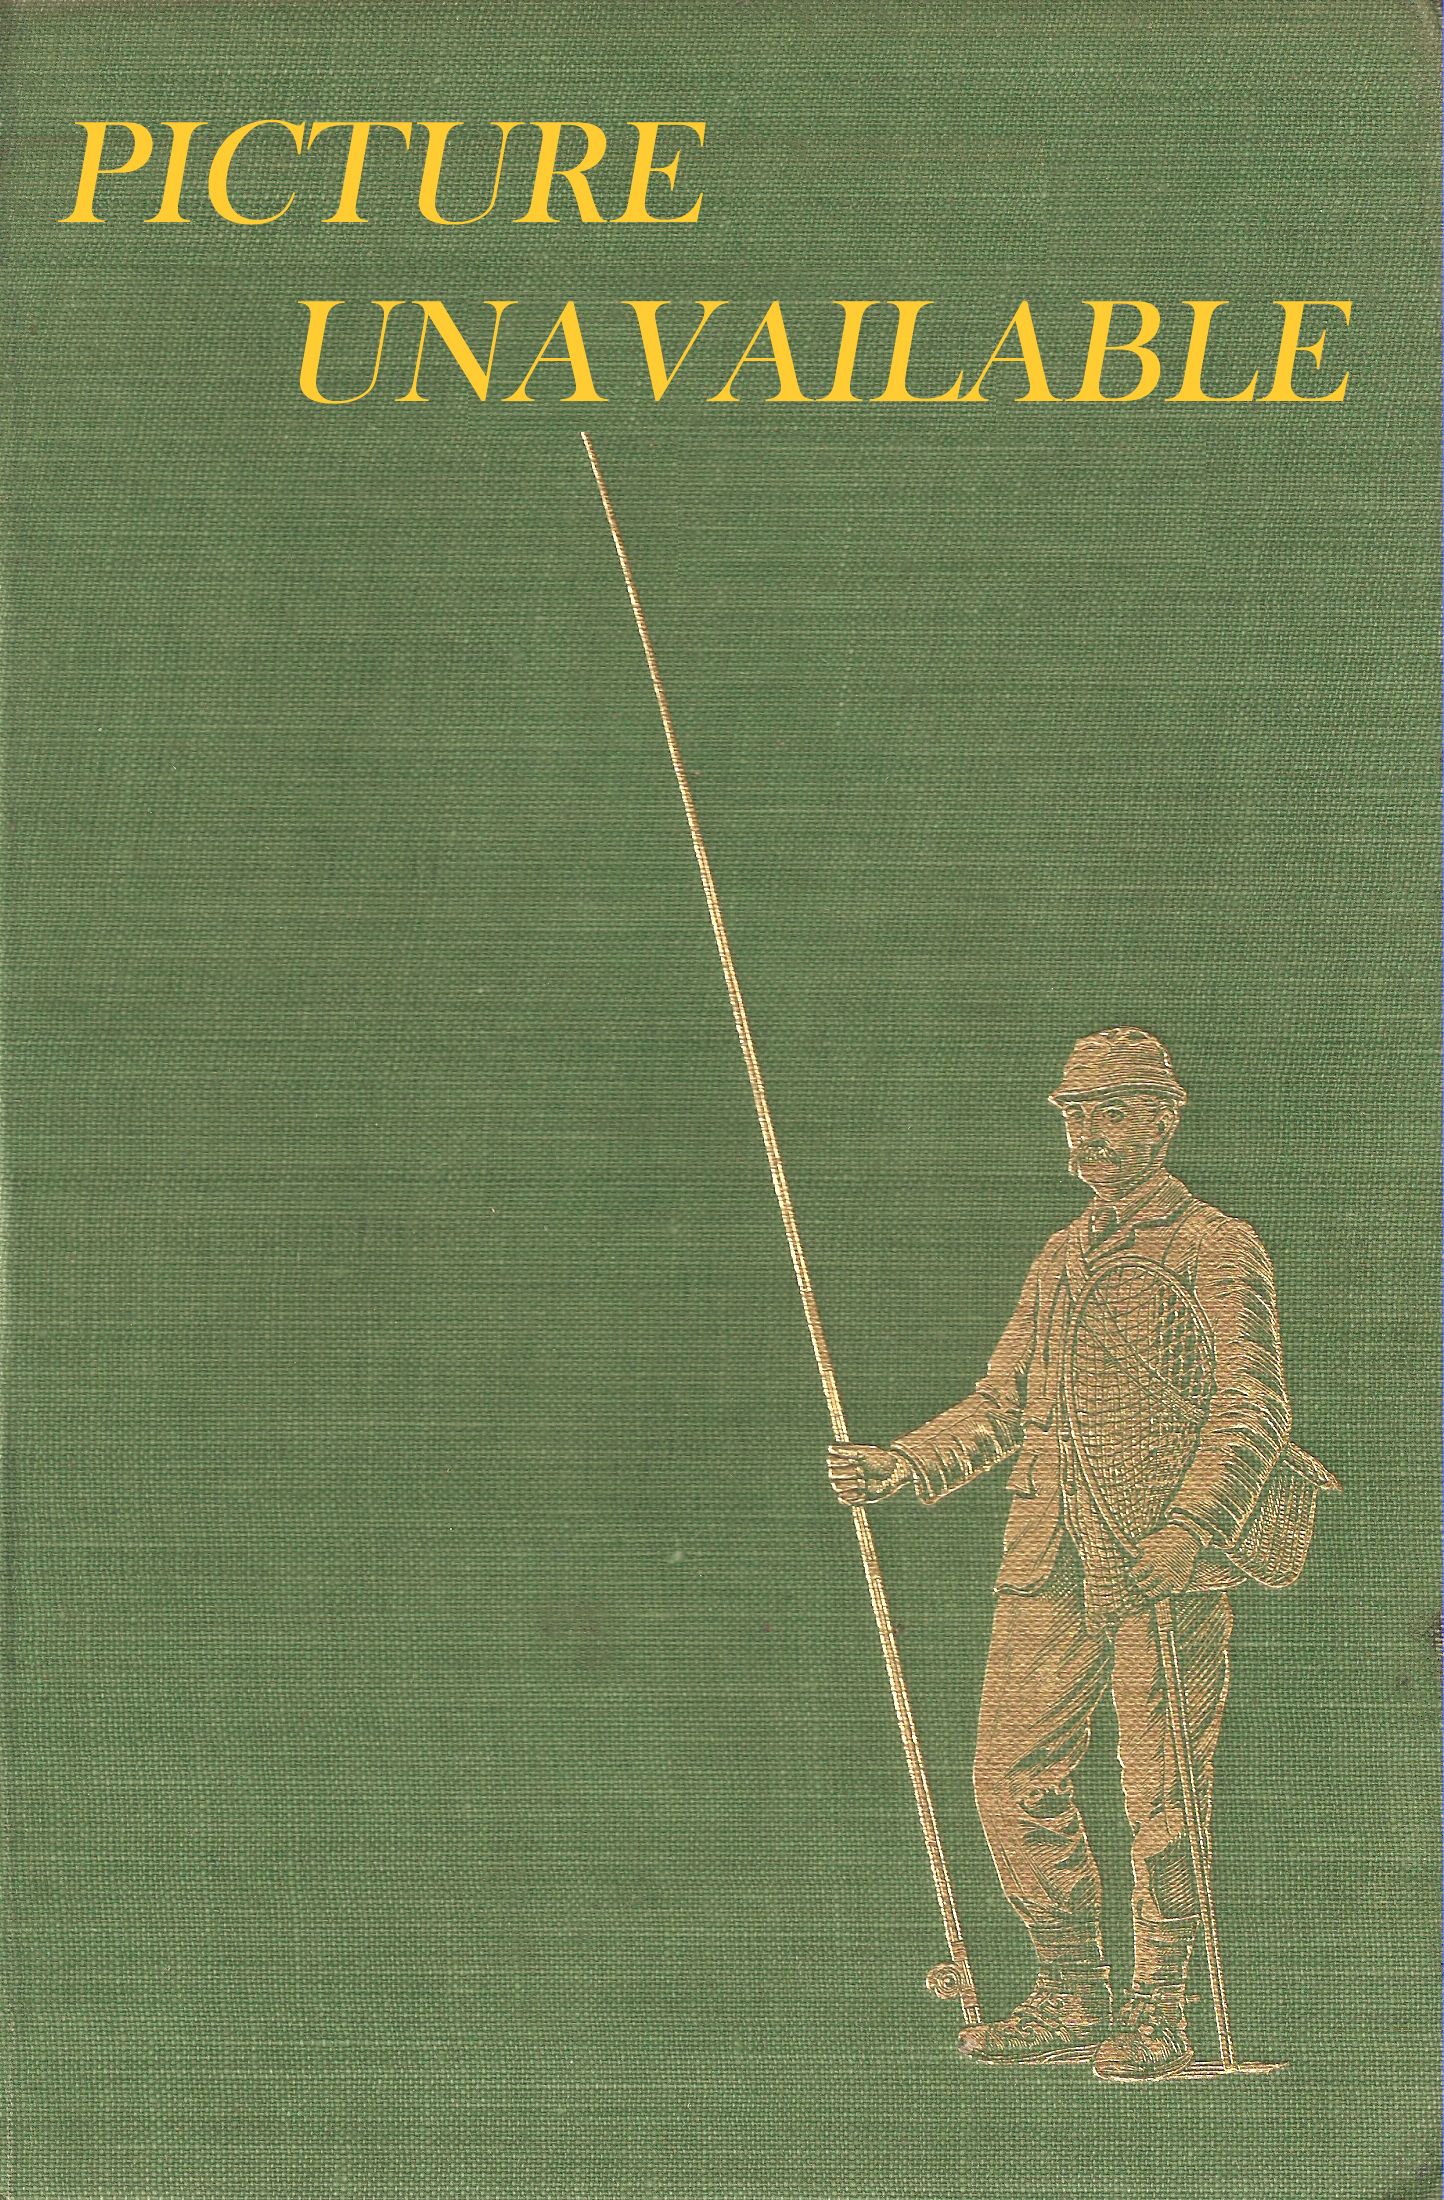 APHRODITE'S CARP. By John Langridge. Limited first edition.